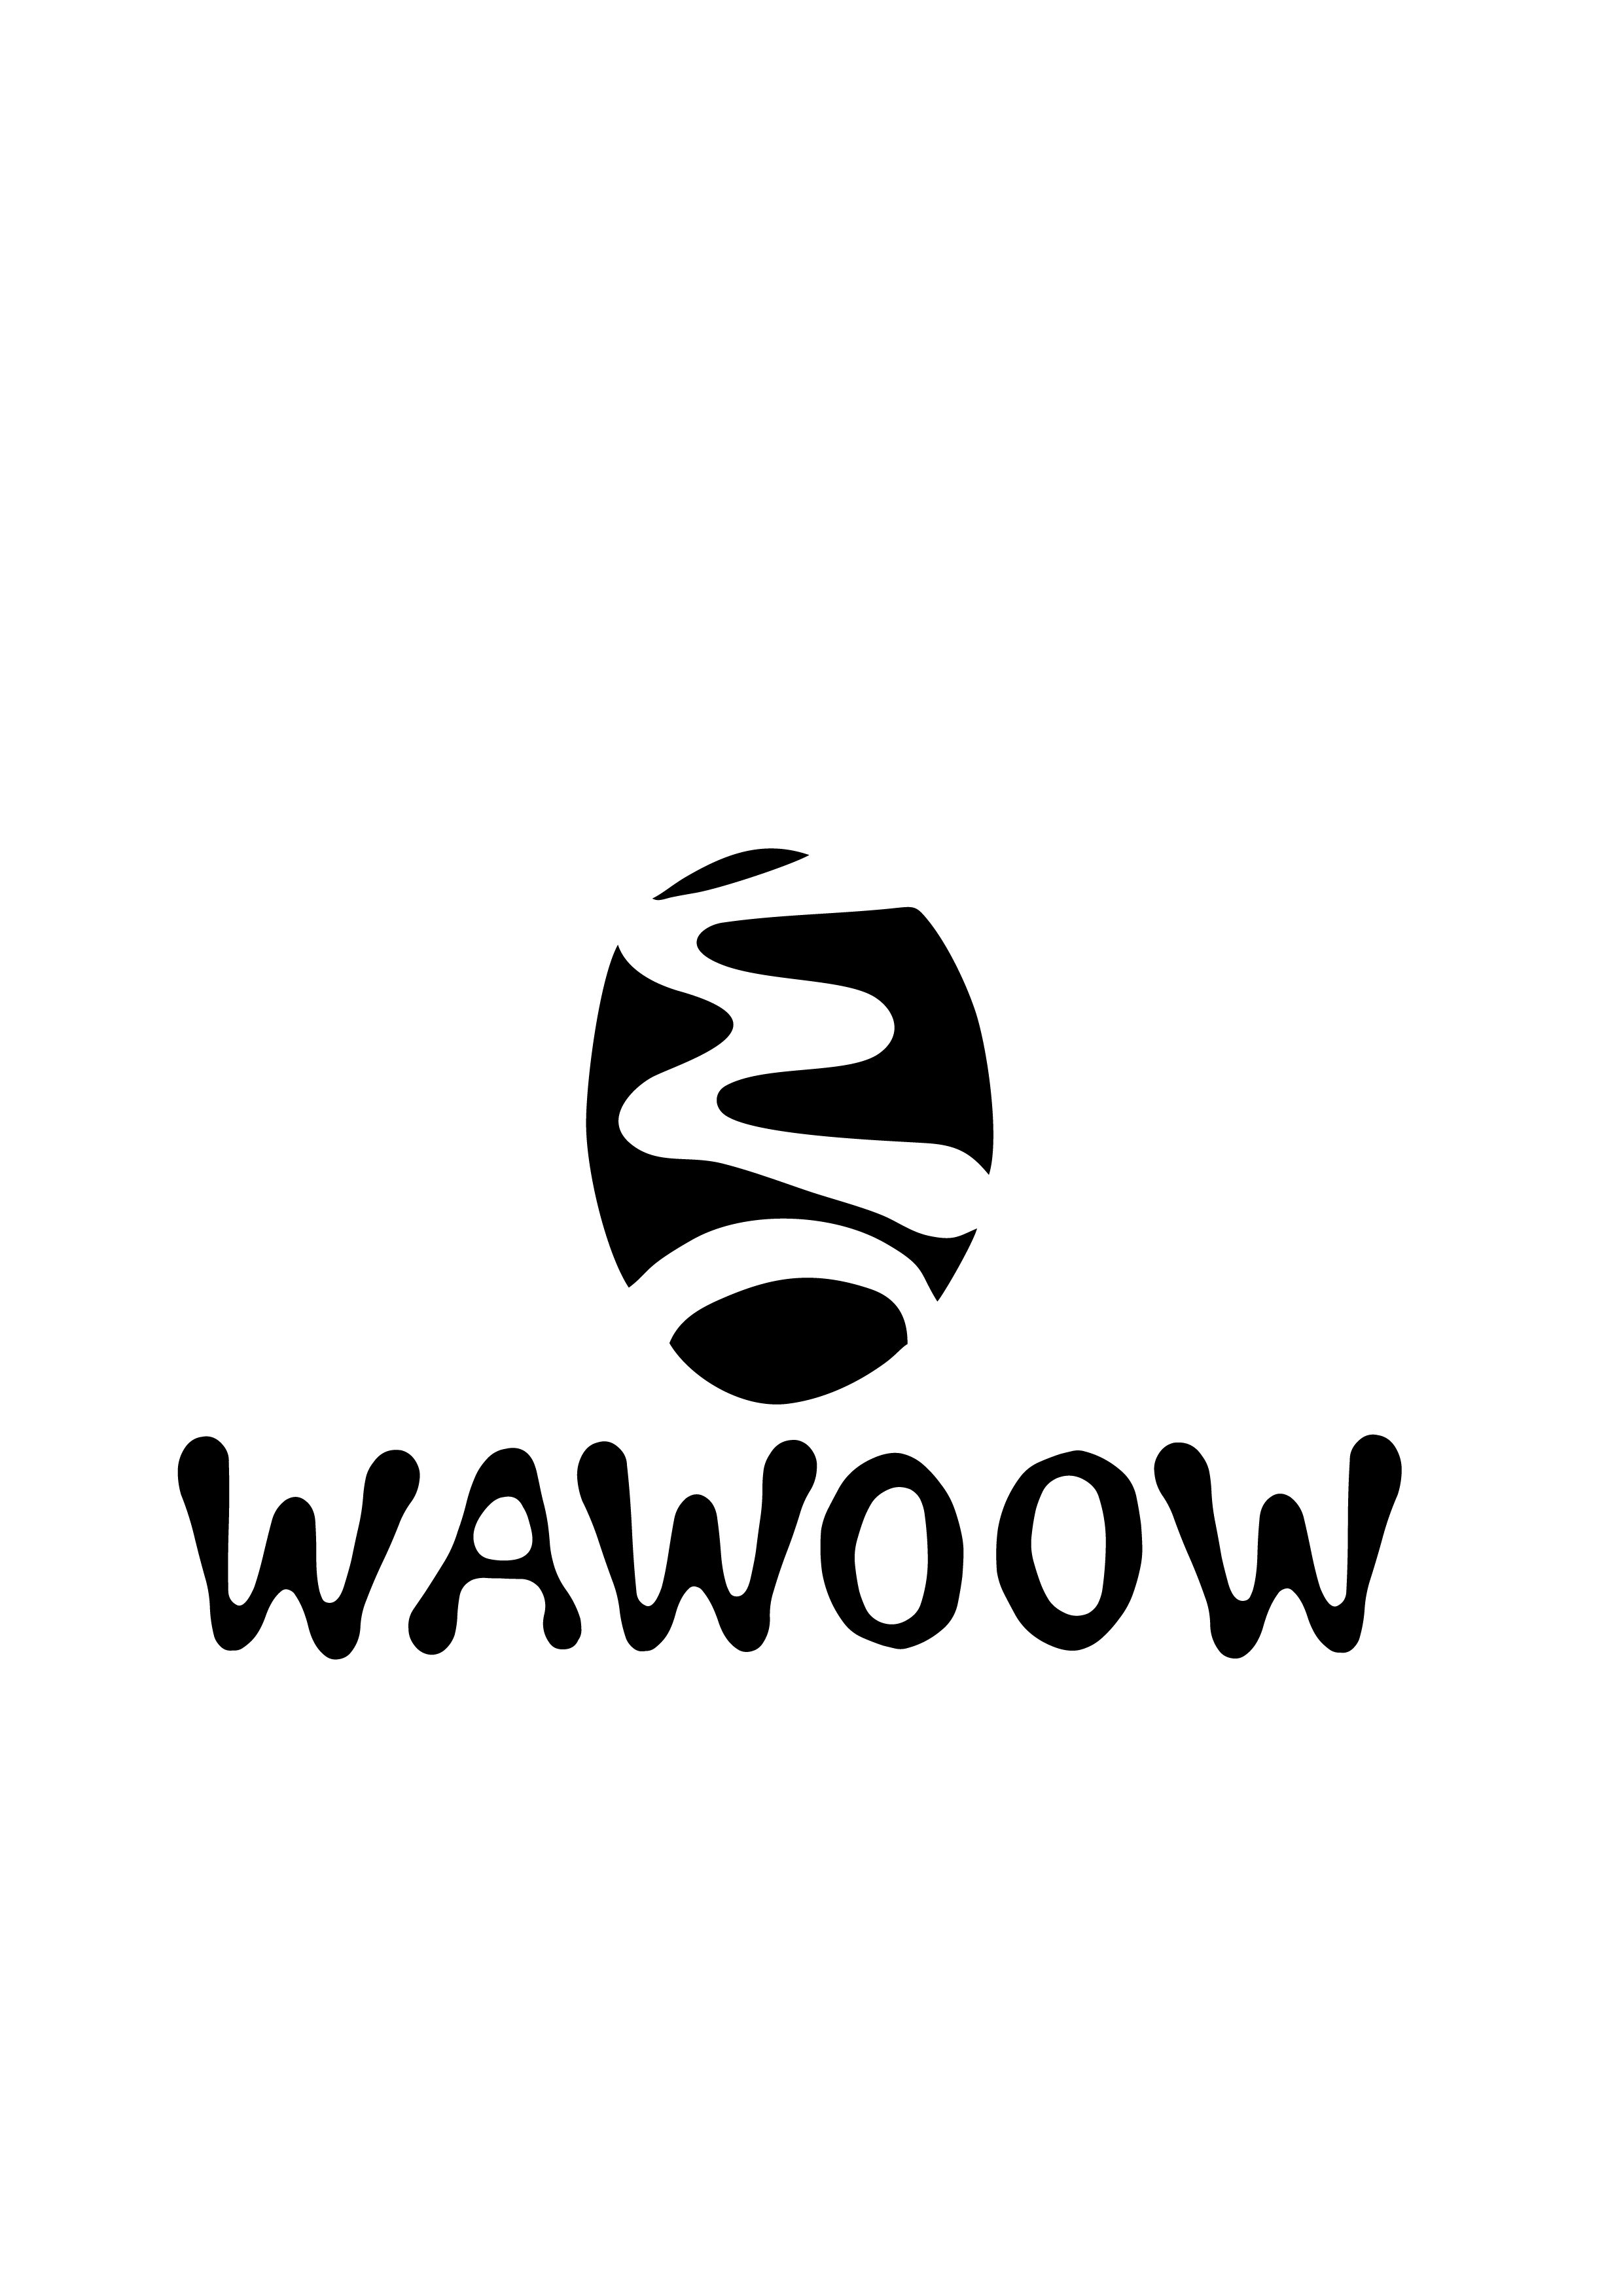  WO WAWOOW